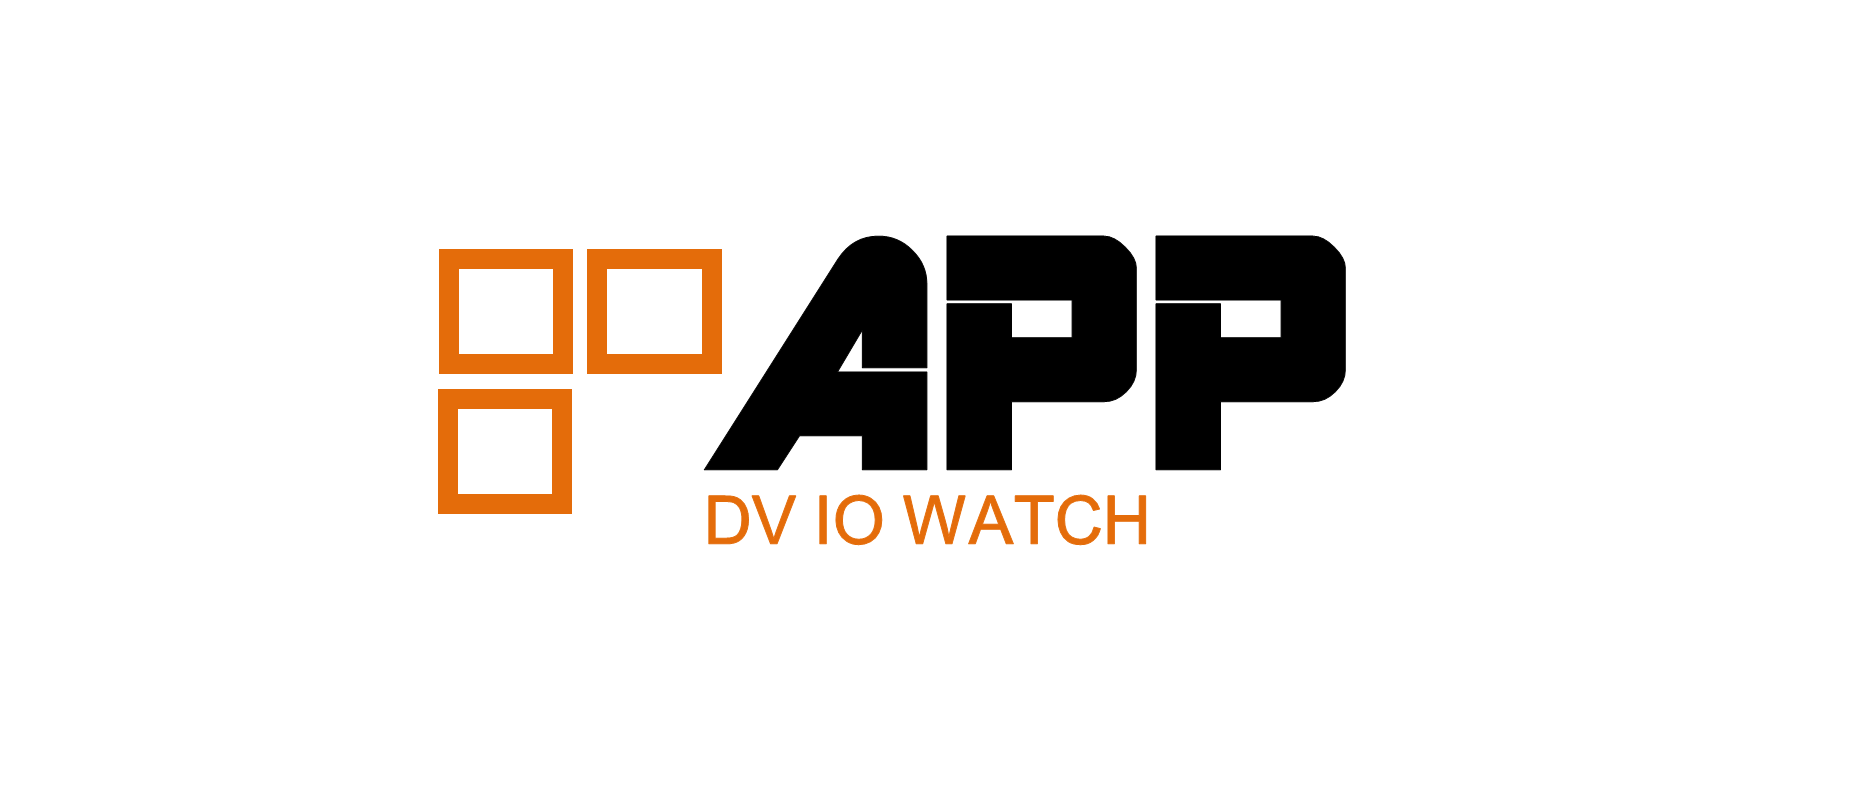 DV IO Watch Download